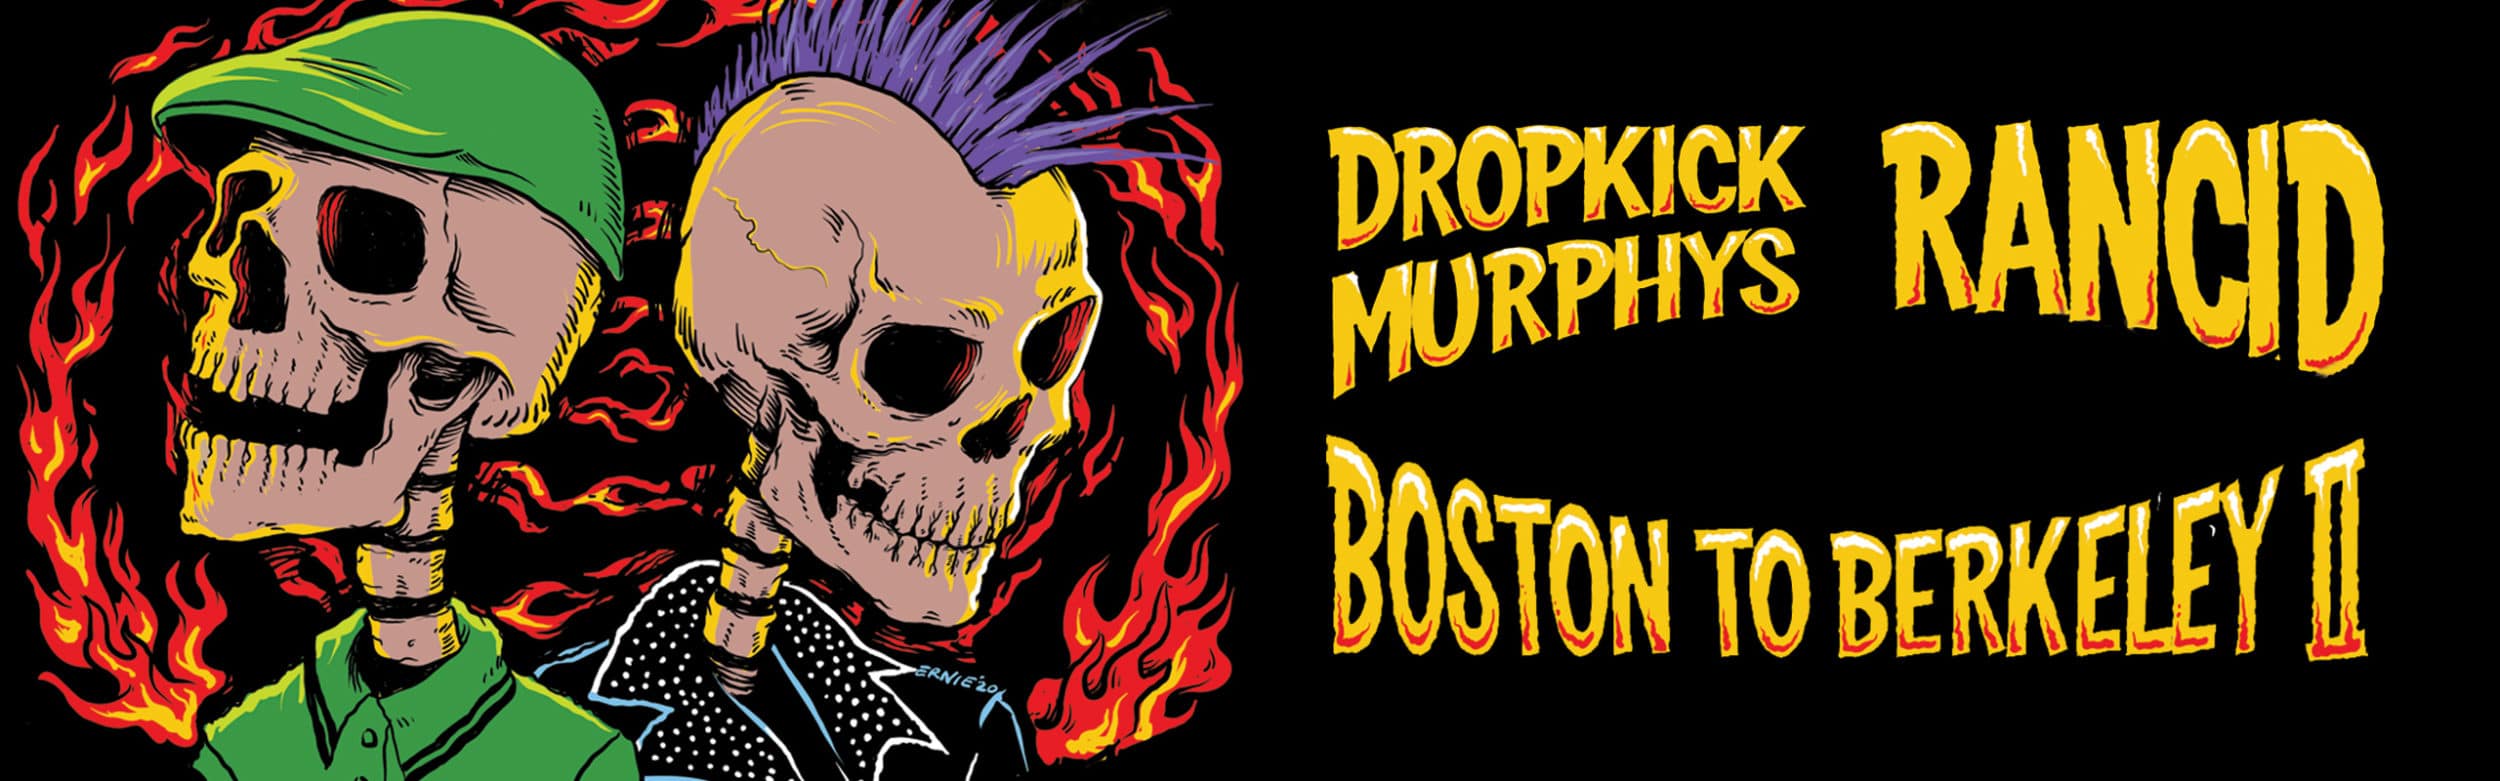 Dropkick Murphys and Rancid “Boston to Berkeley II”